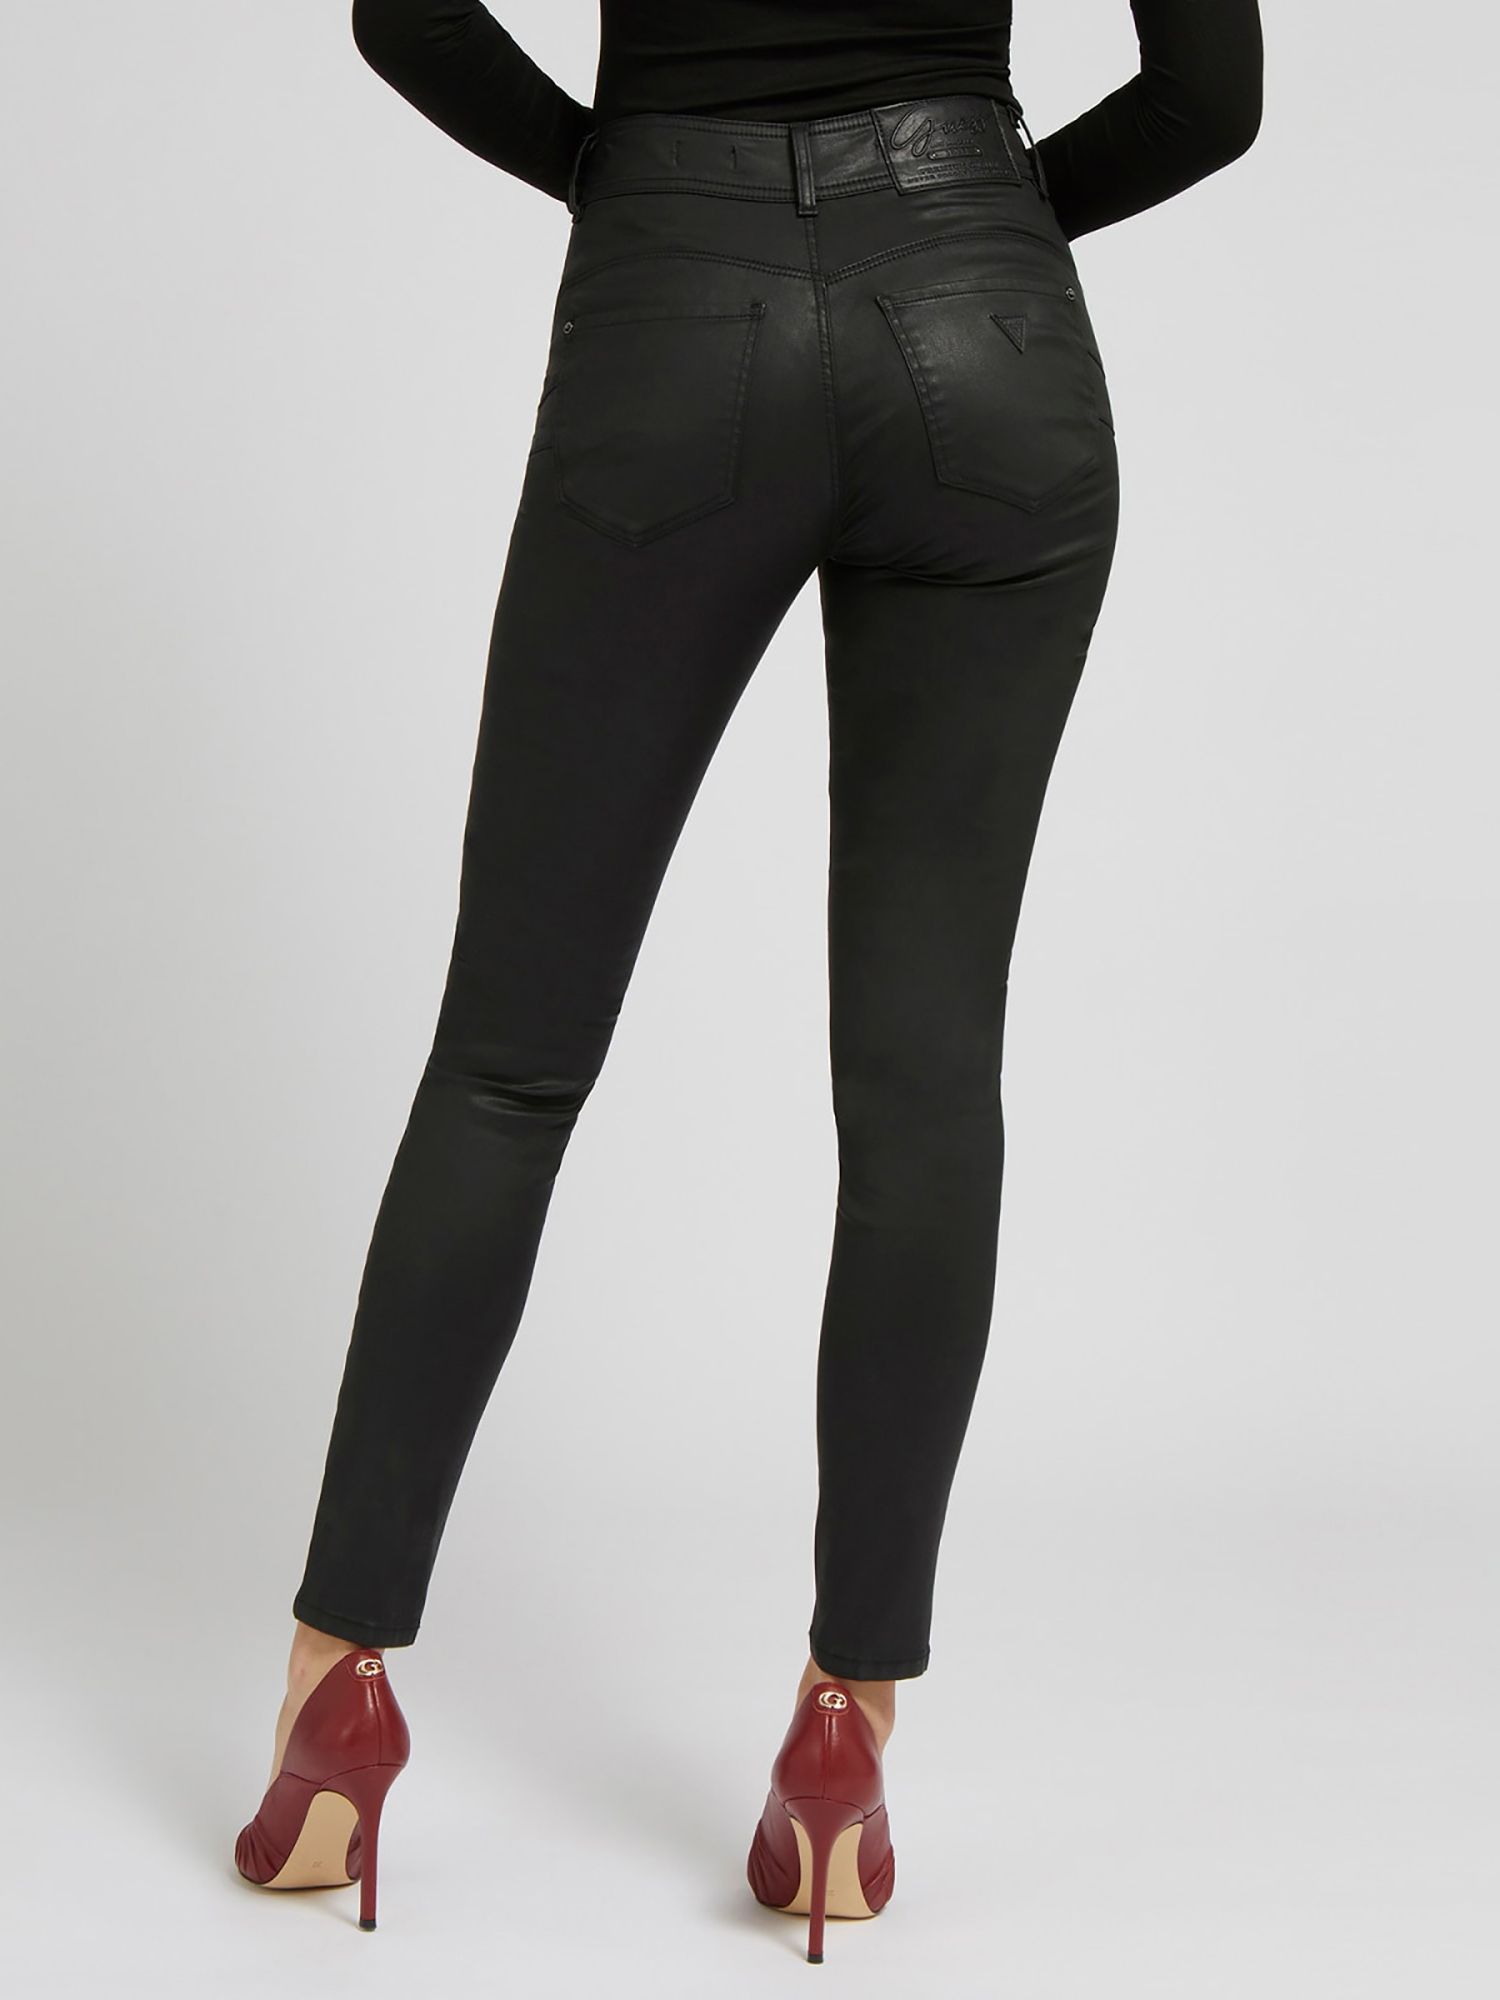 GUESS Shape Up High-Rise Denim Jeans, Black, W27/L31